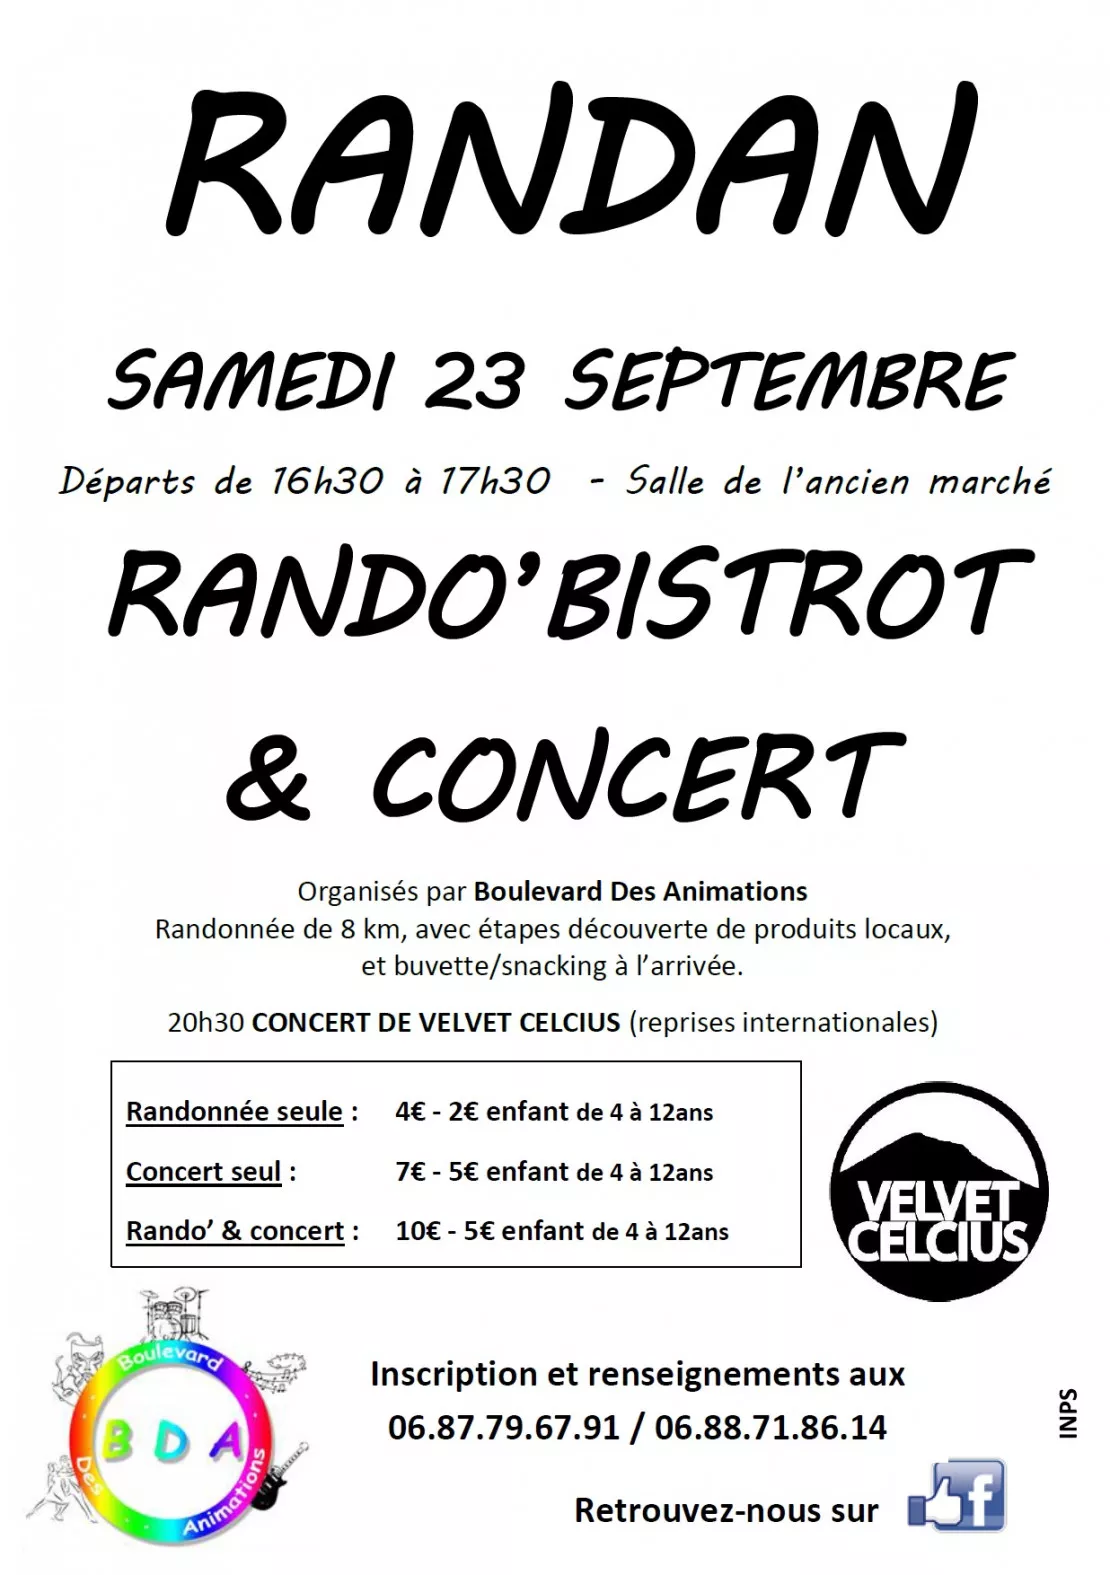 Randan : Rando' bistrot & concert